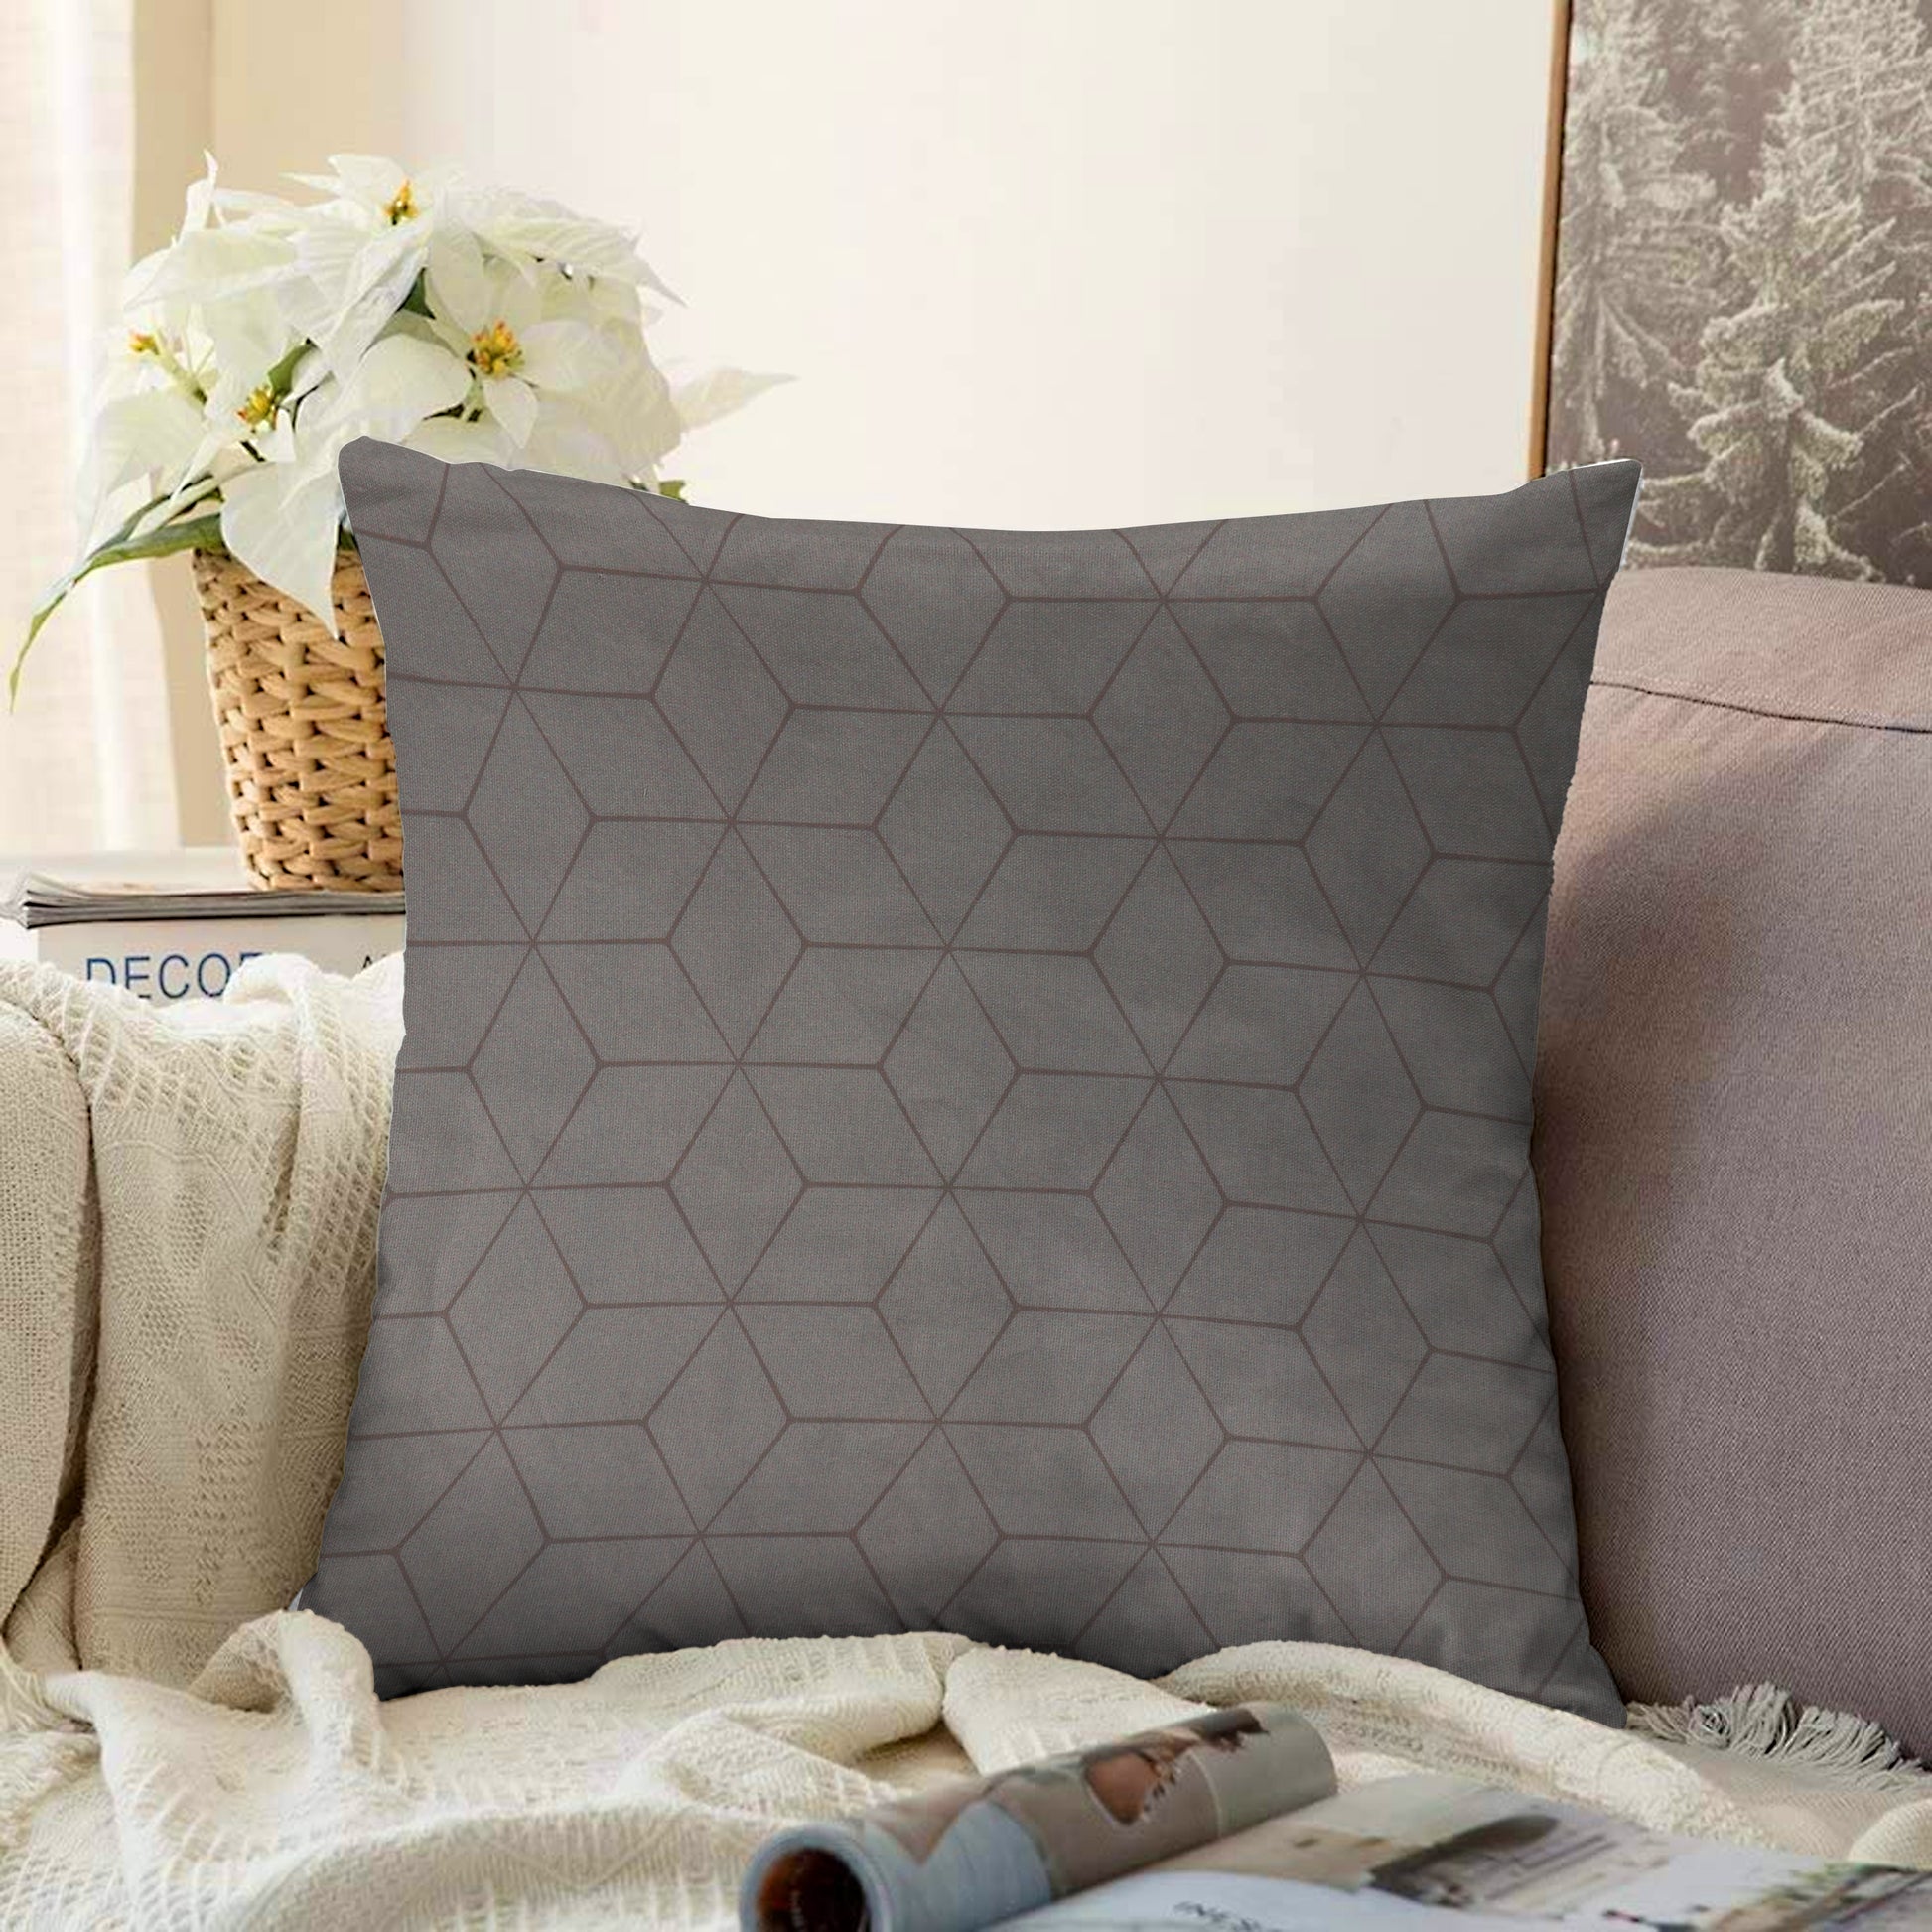 2-Pack Cotton Decorative Throw Pillows - 45x45 cm Square, Grey